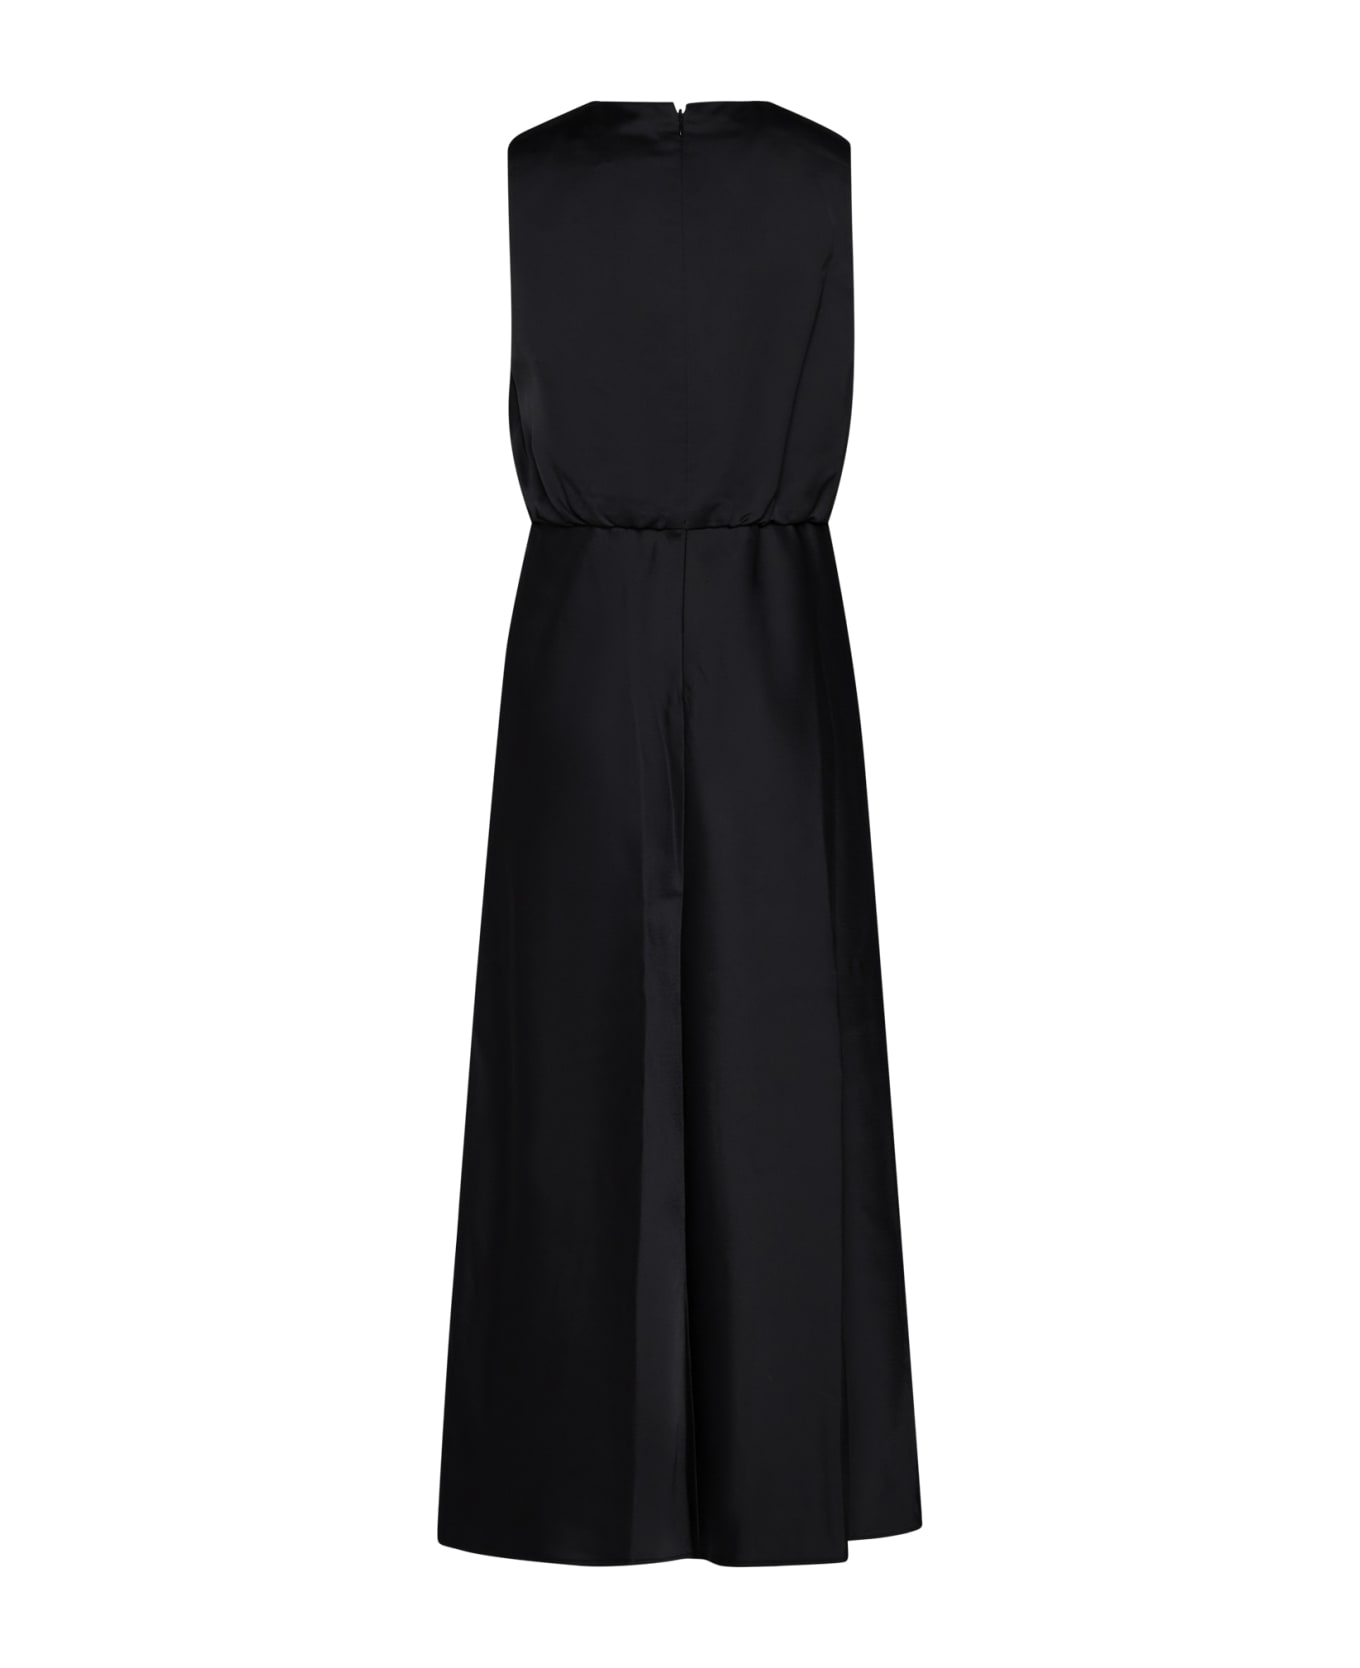 DKNY Dress - Black